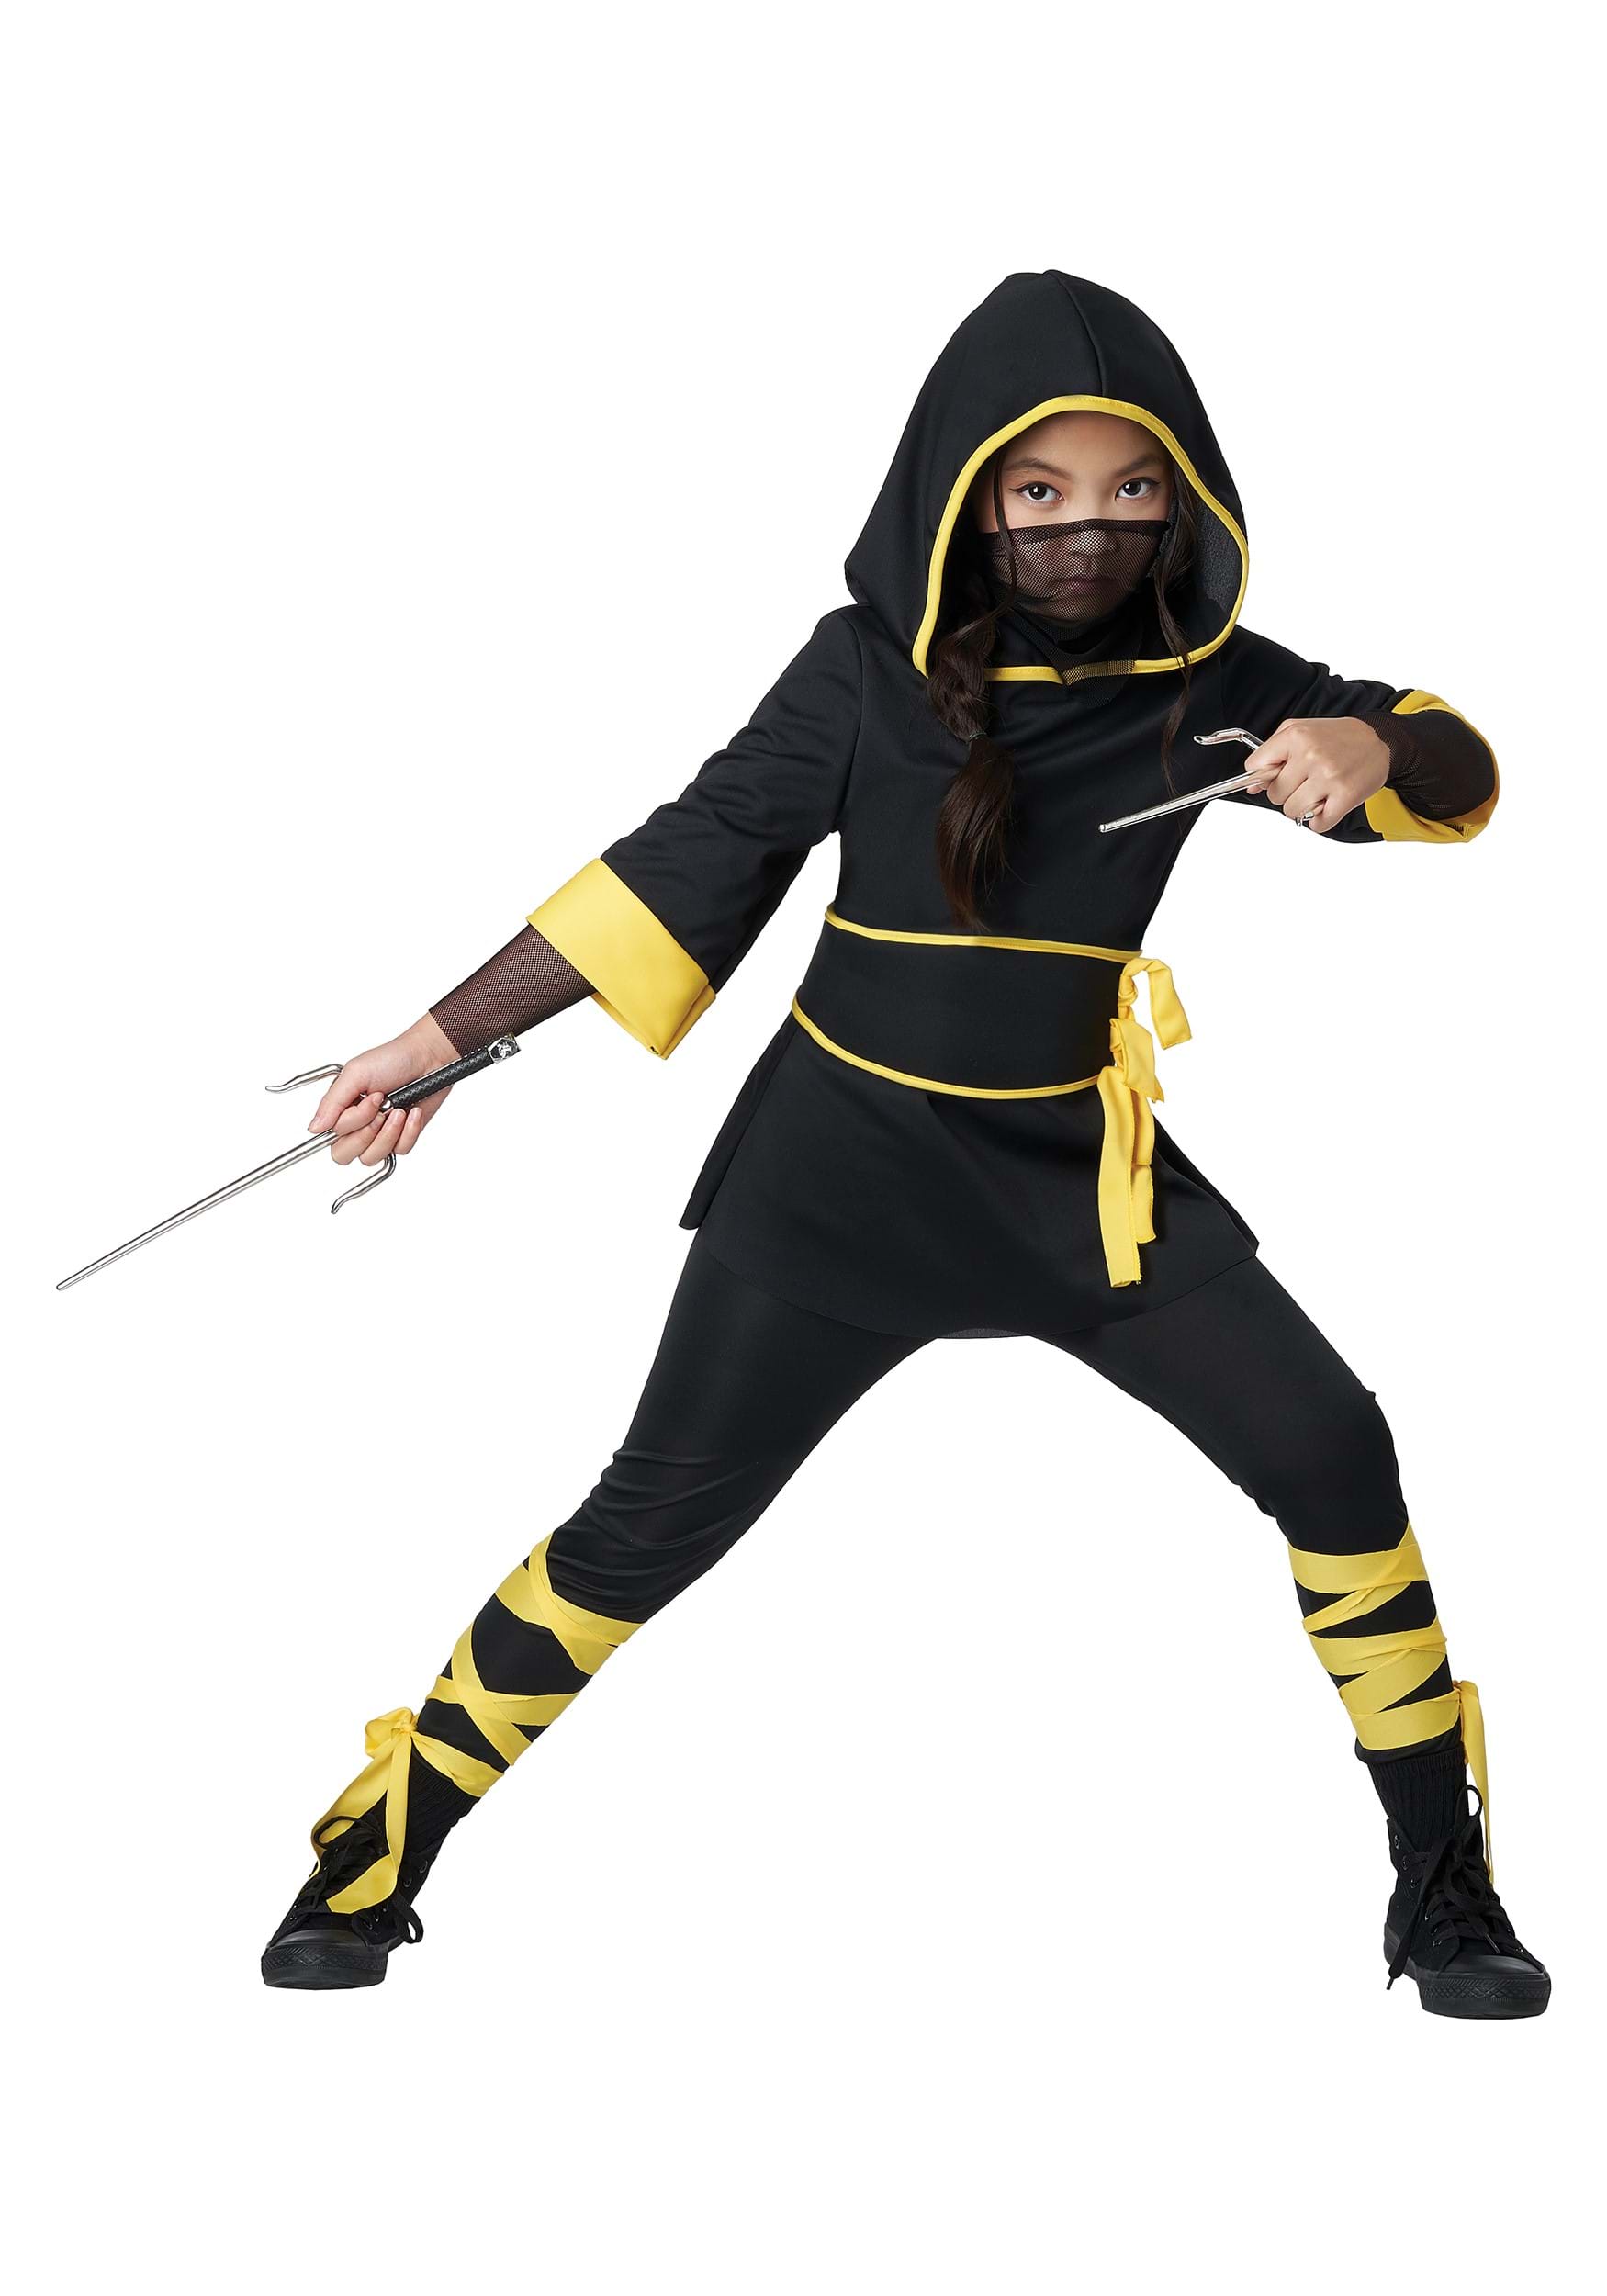 Kids Ninja Costume With Halloween Ninja Accessories Boys Dress Up Best  Gifts